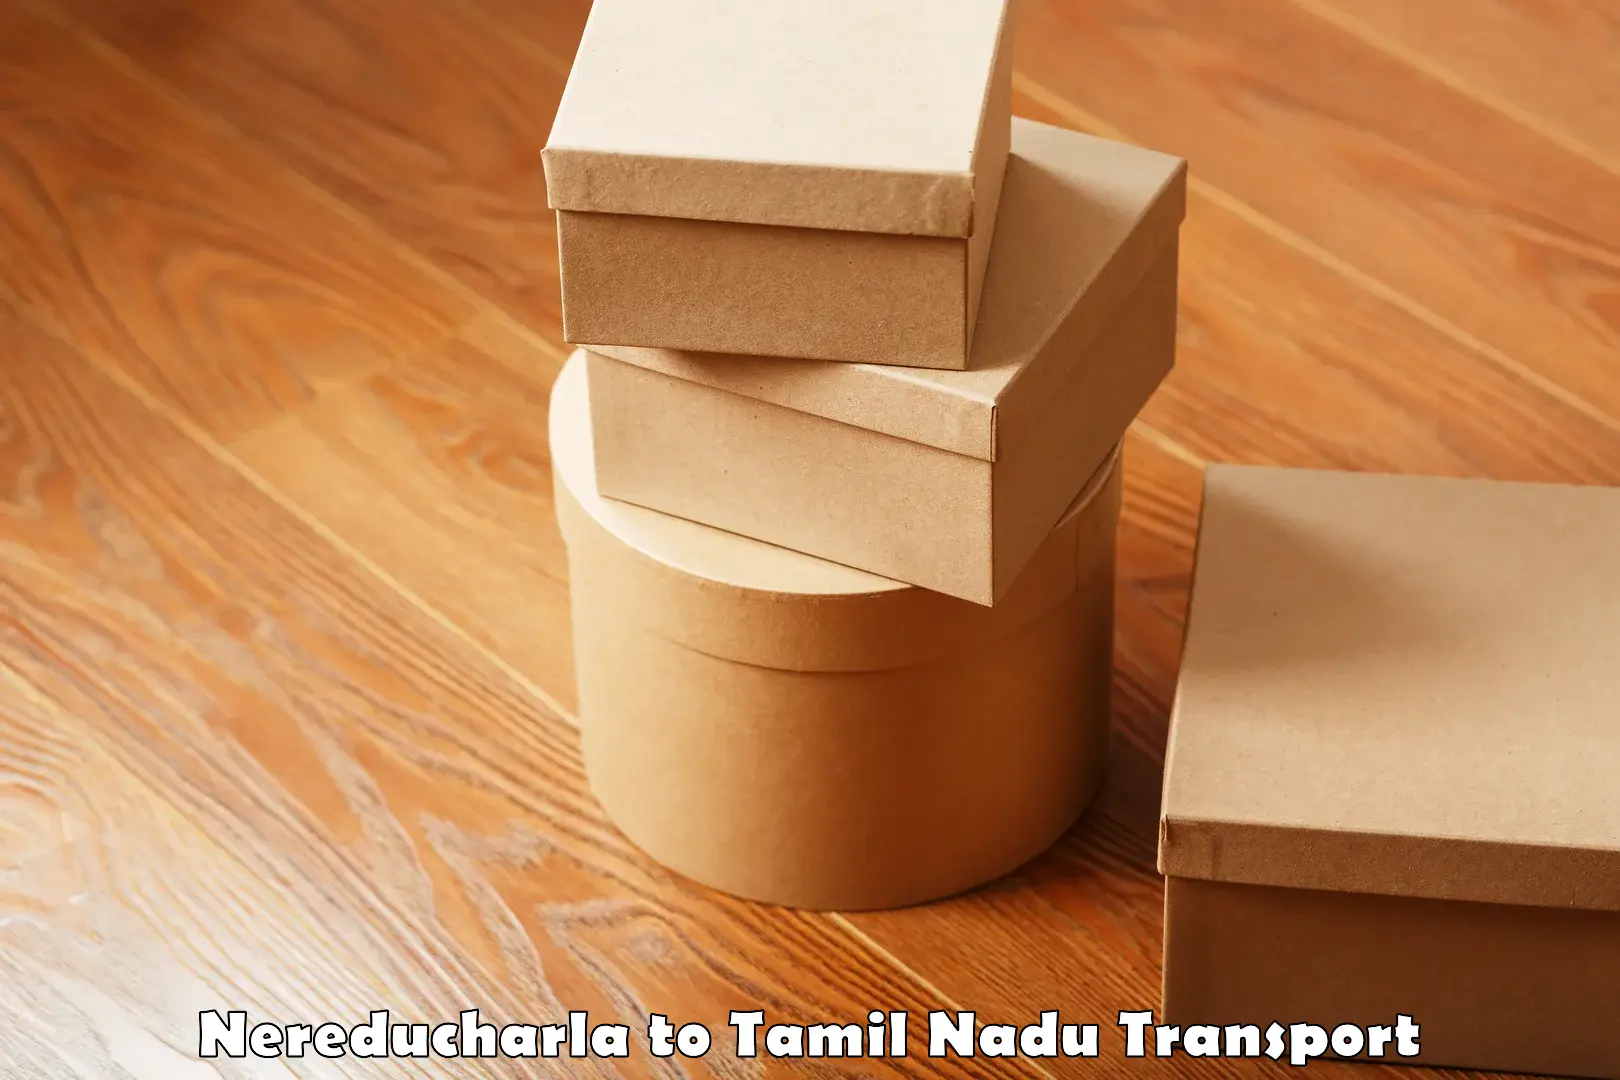 Logistics transportation services Nereducharla to Cuddalore